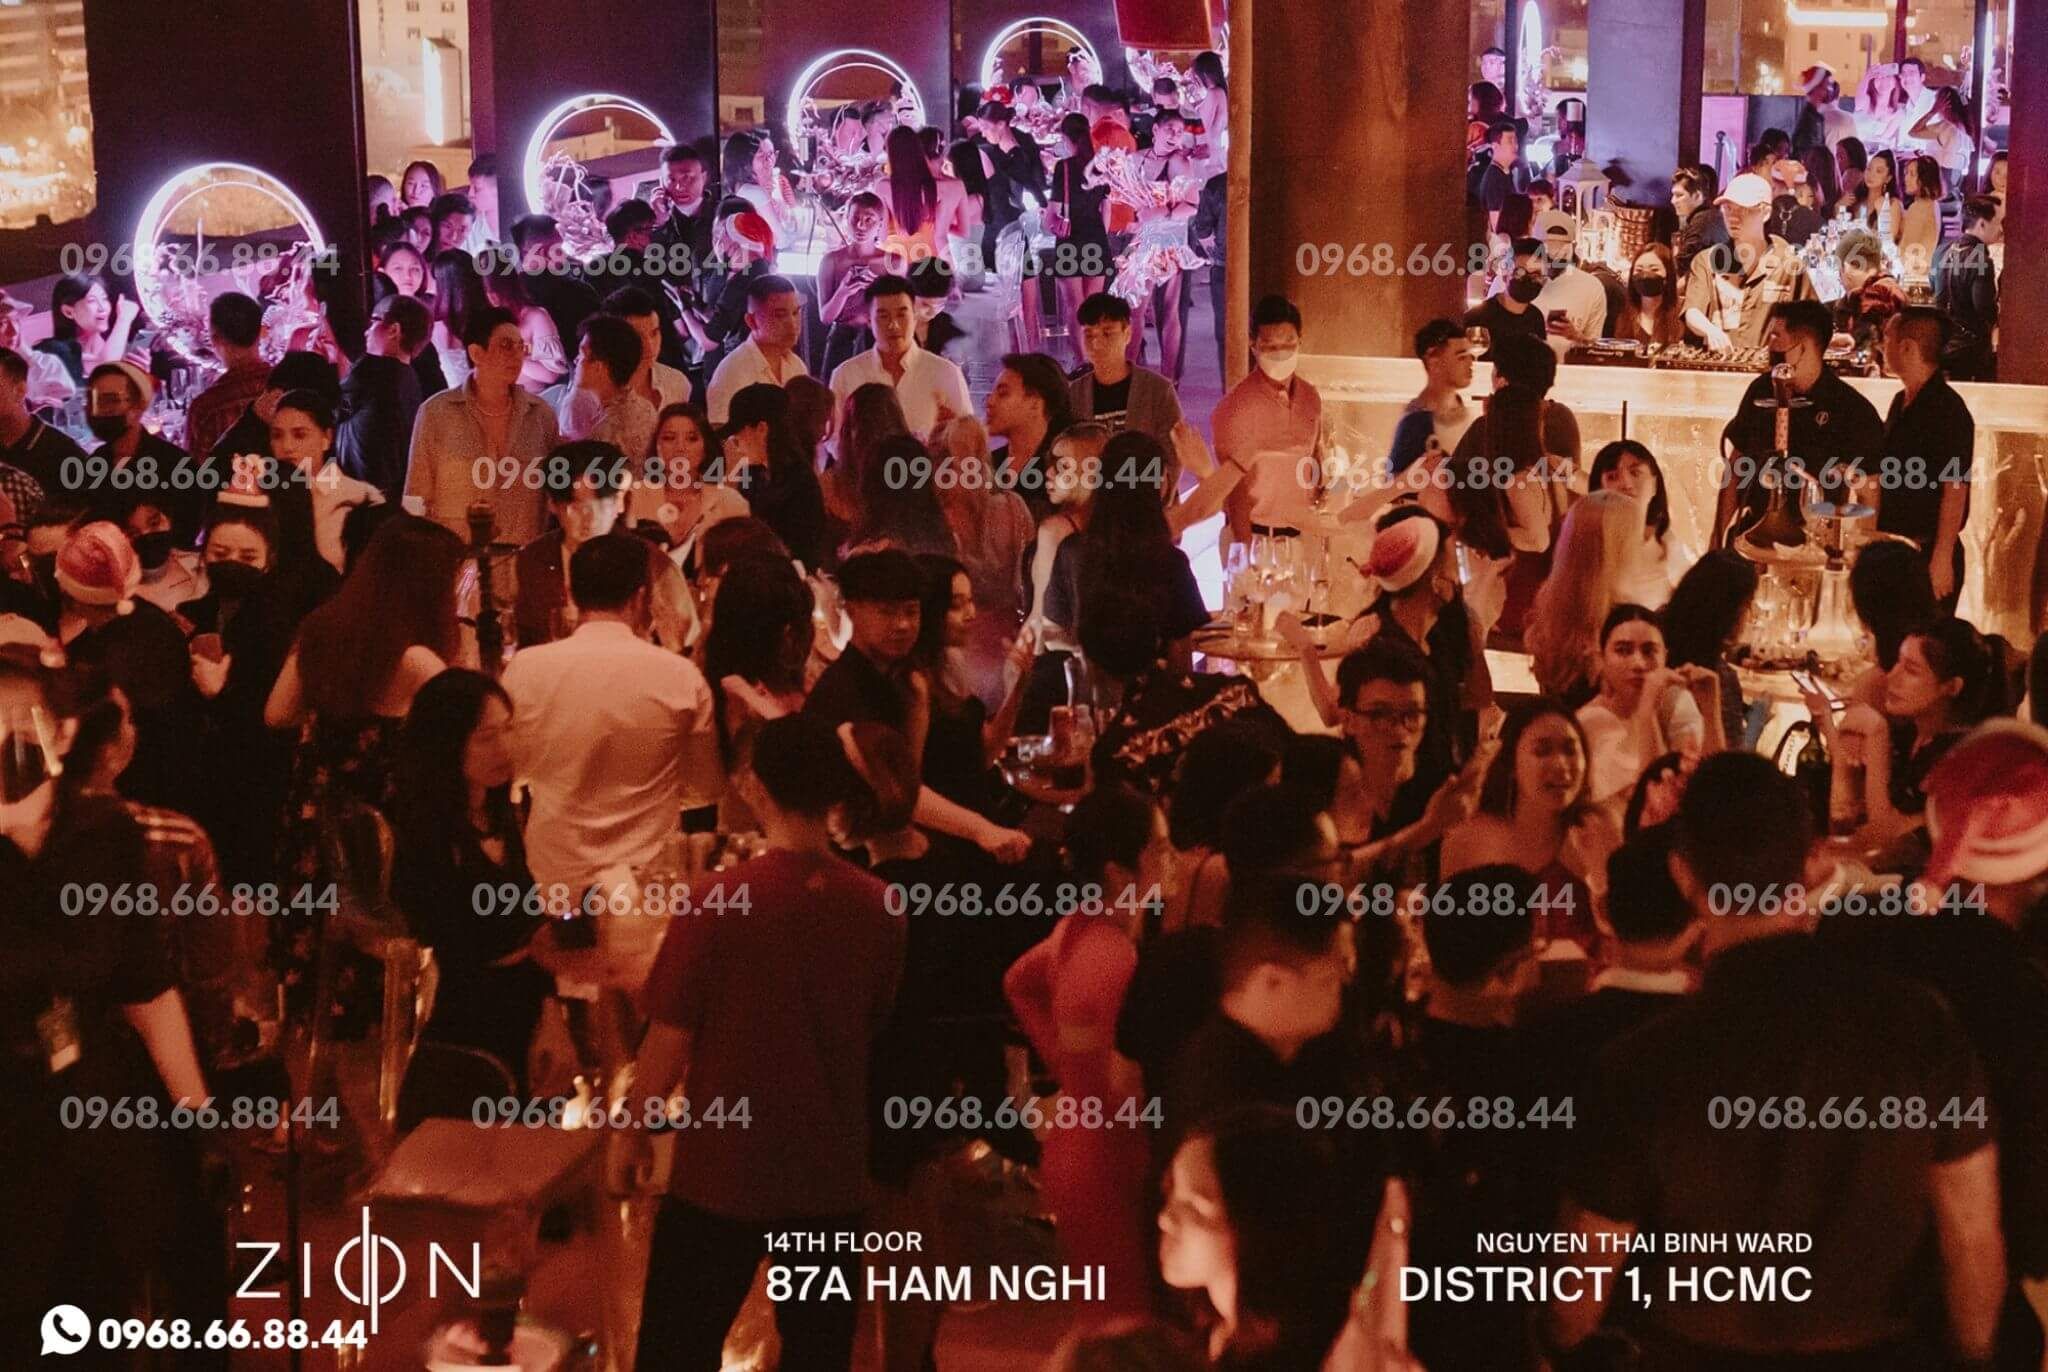 Zion Sky Lounge & Dining - 87A Hàm Nghi